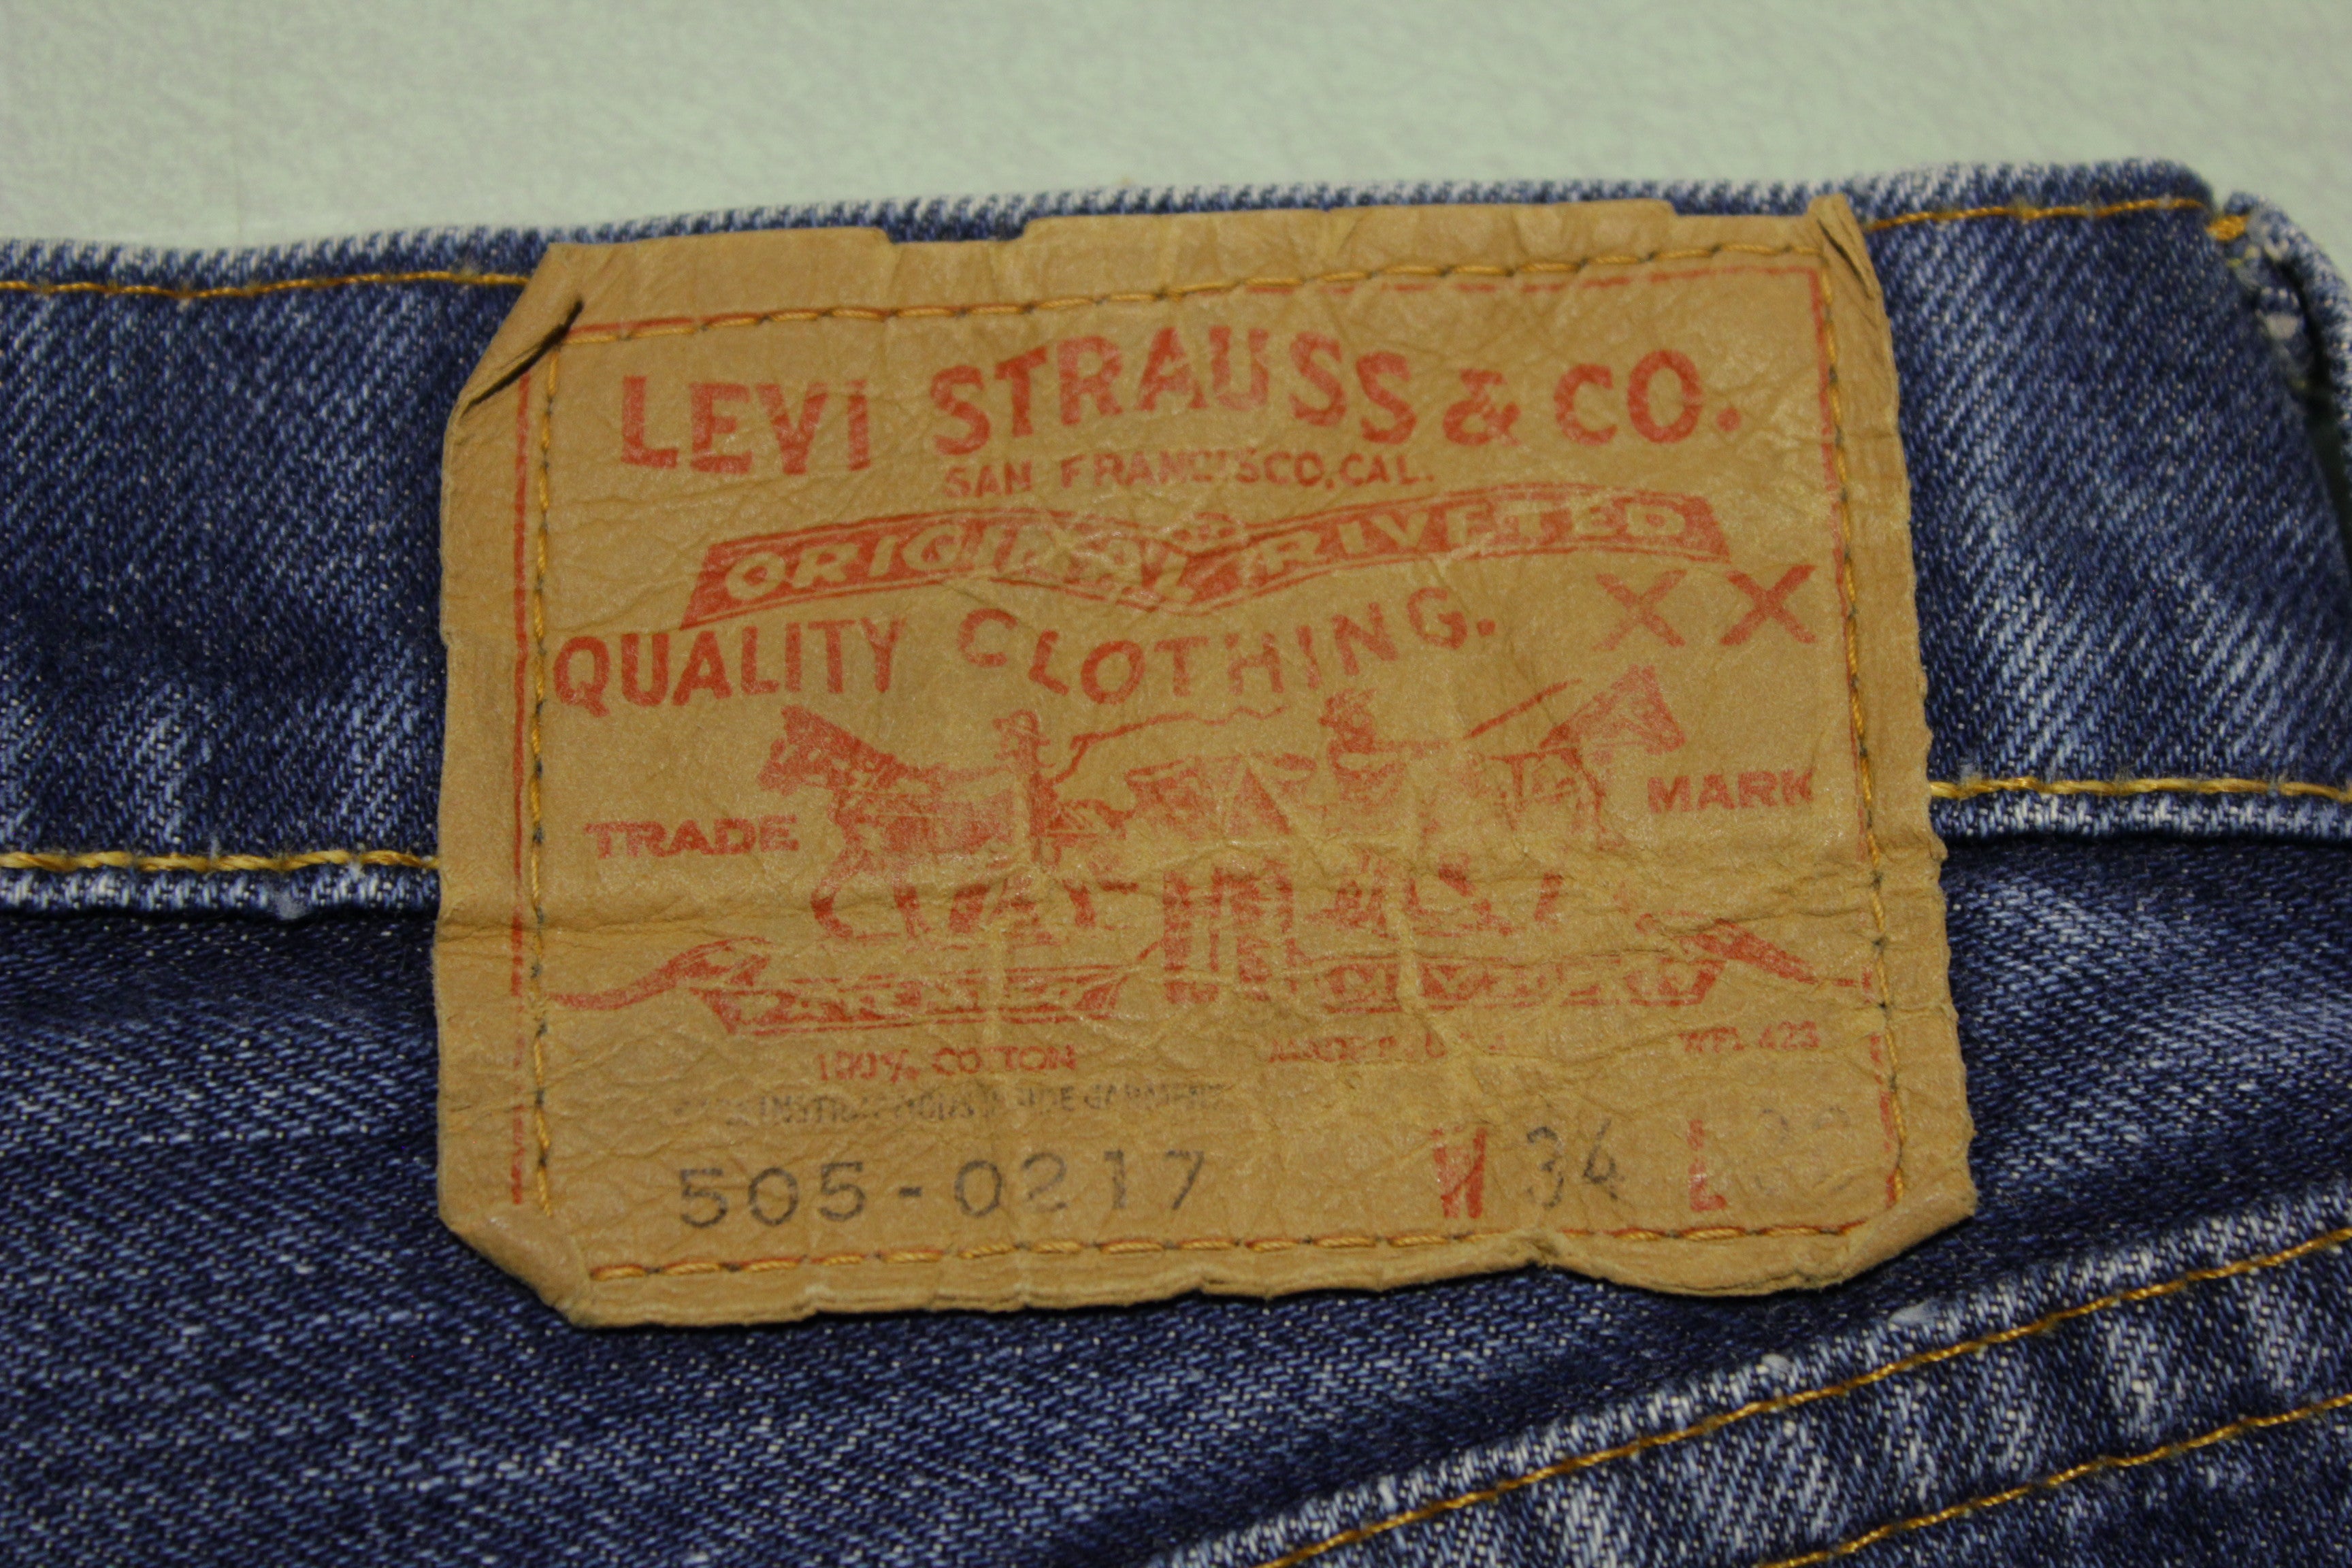 Levis 505-0217 Vintage Big E 60s Selvedge Denim Jeans 505 Made in ...